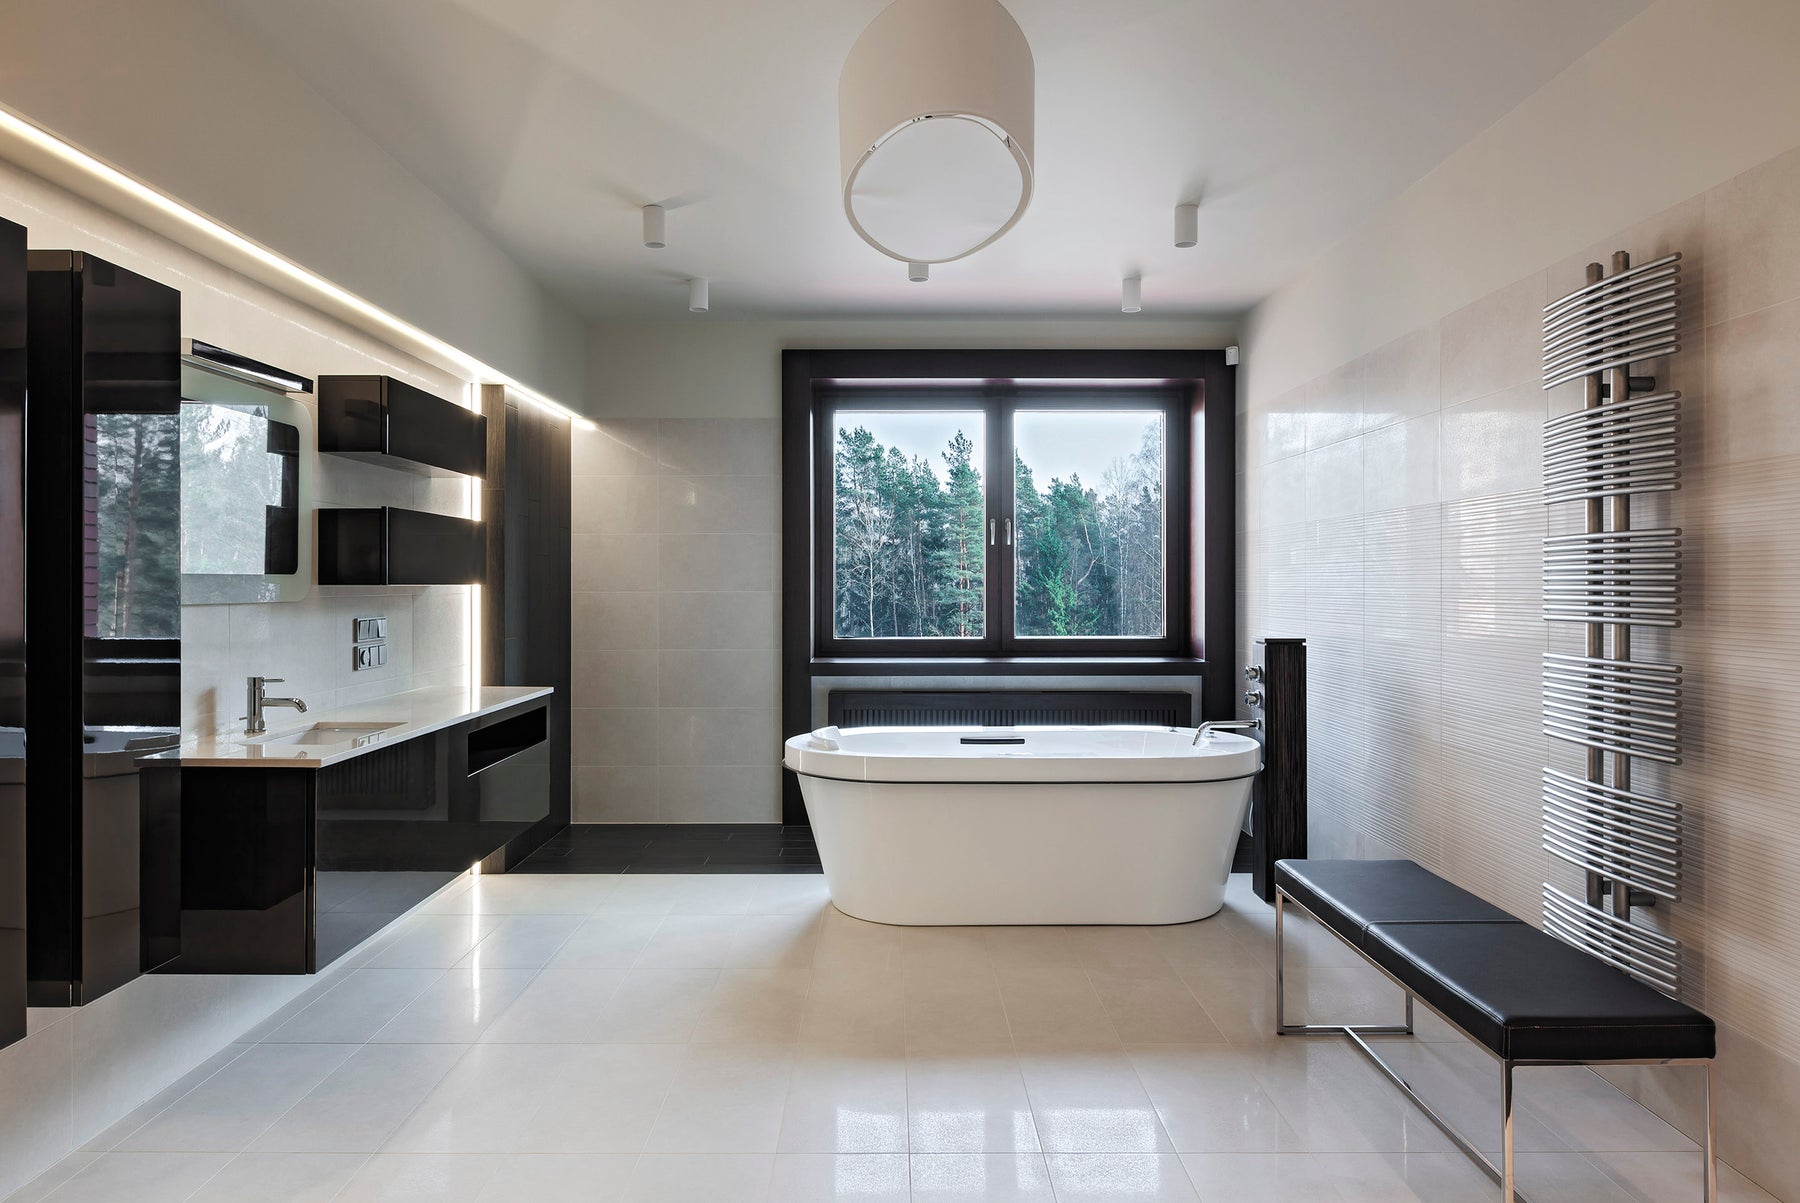 Bathroom Lighitng | Wired4signs USA